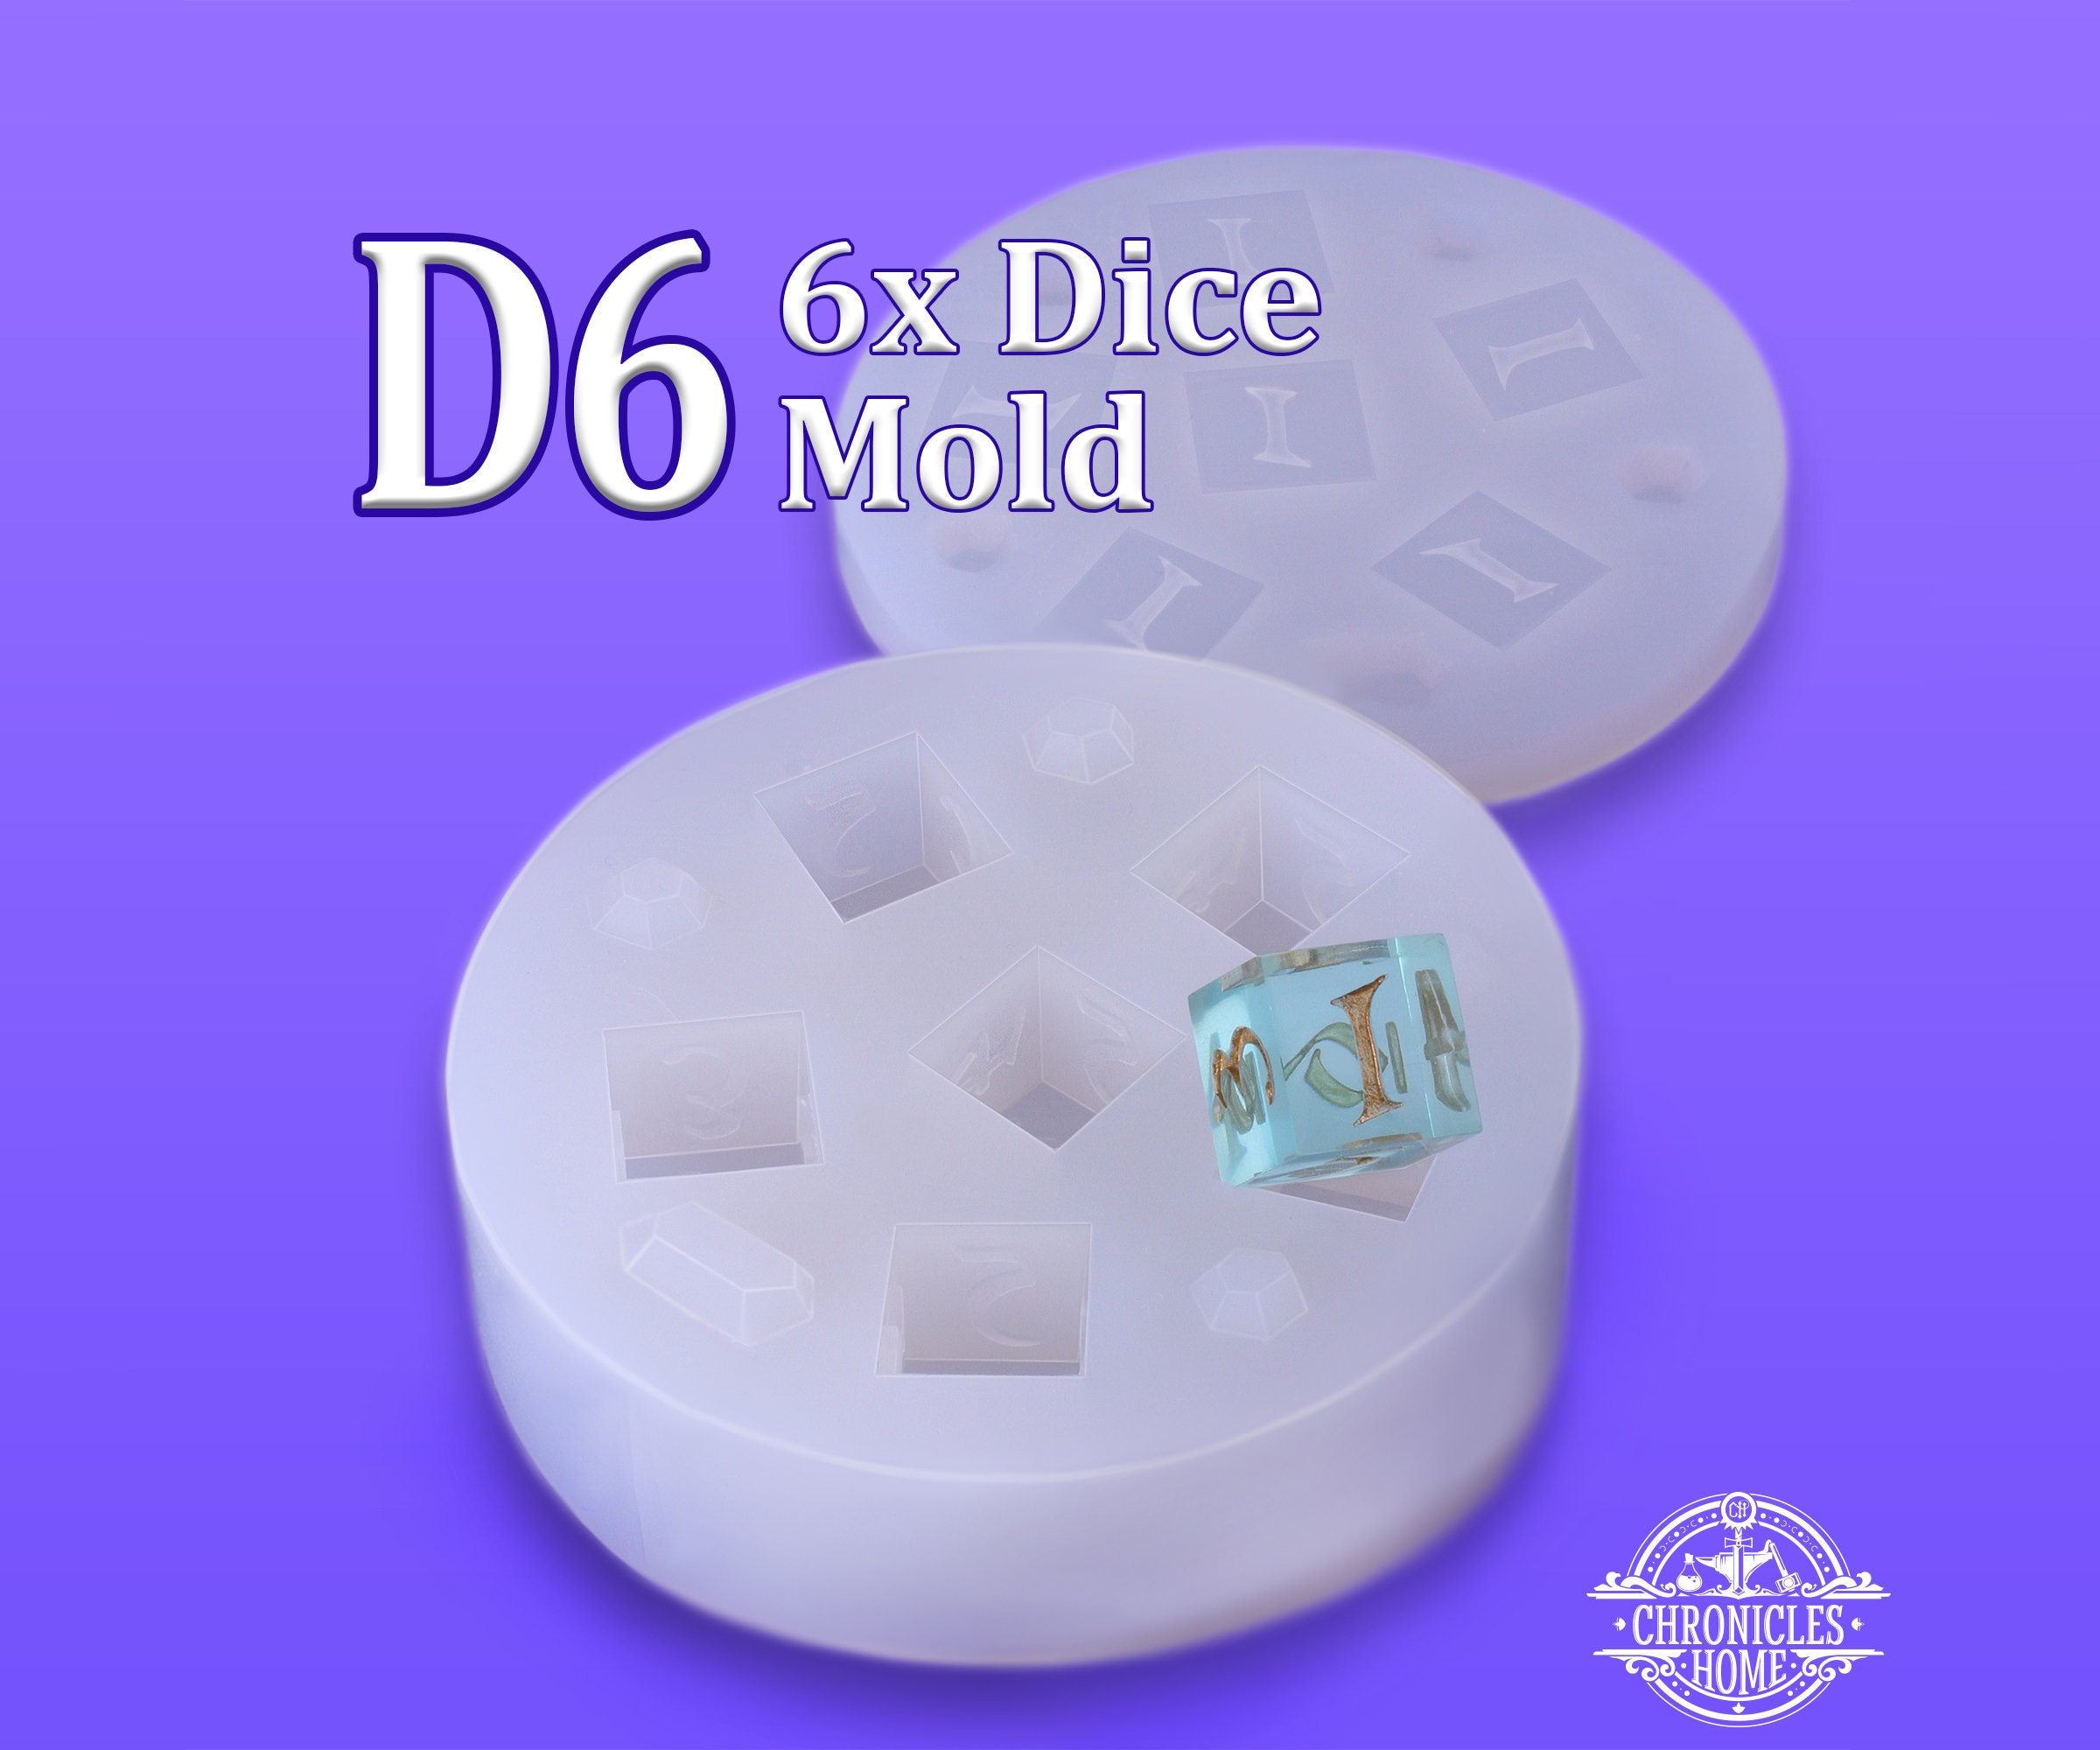 D6 Dice Mold- Multiple Size & Font Options